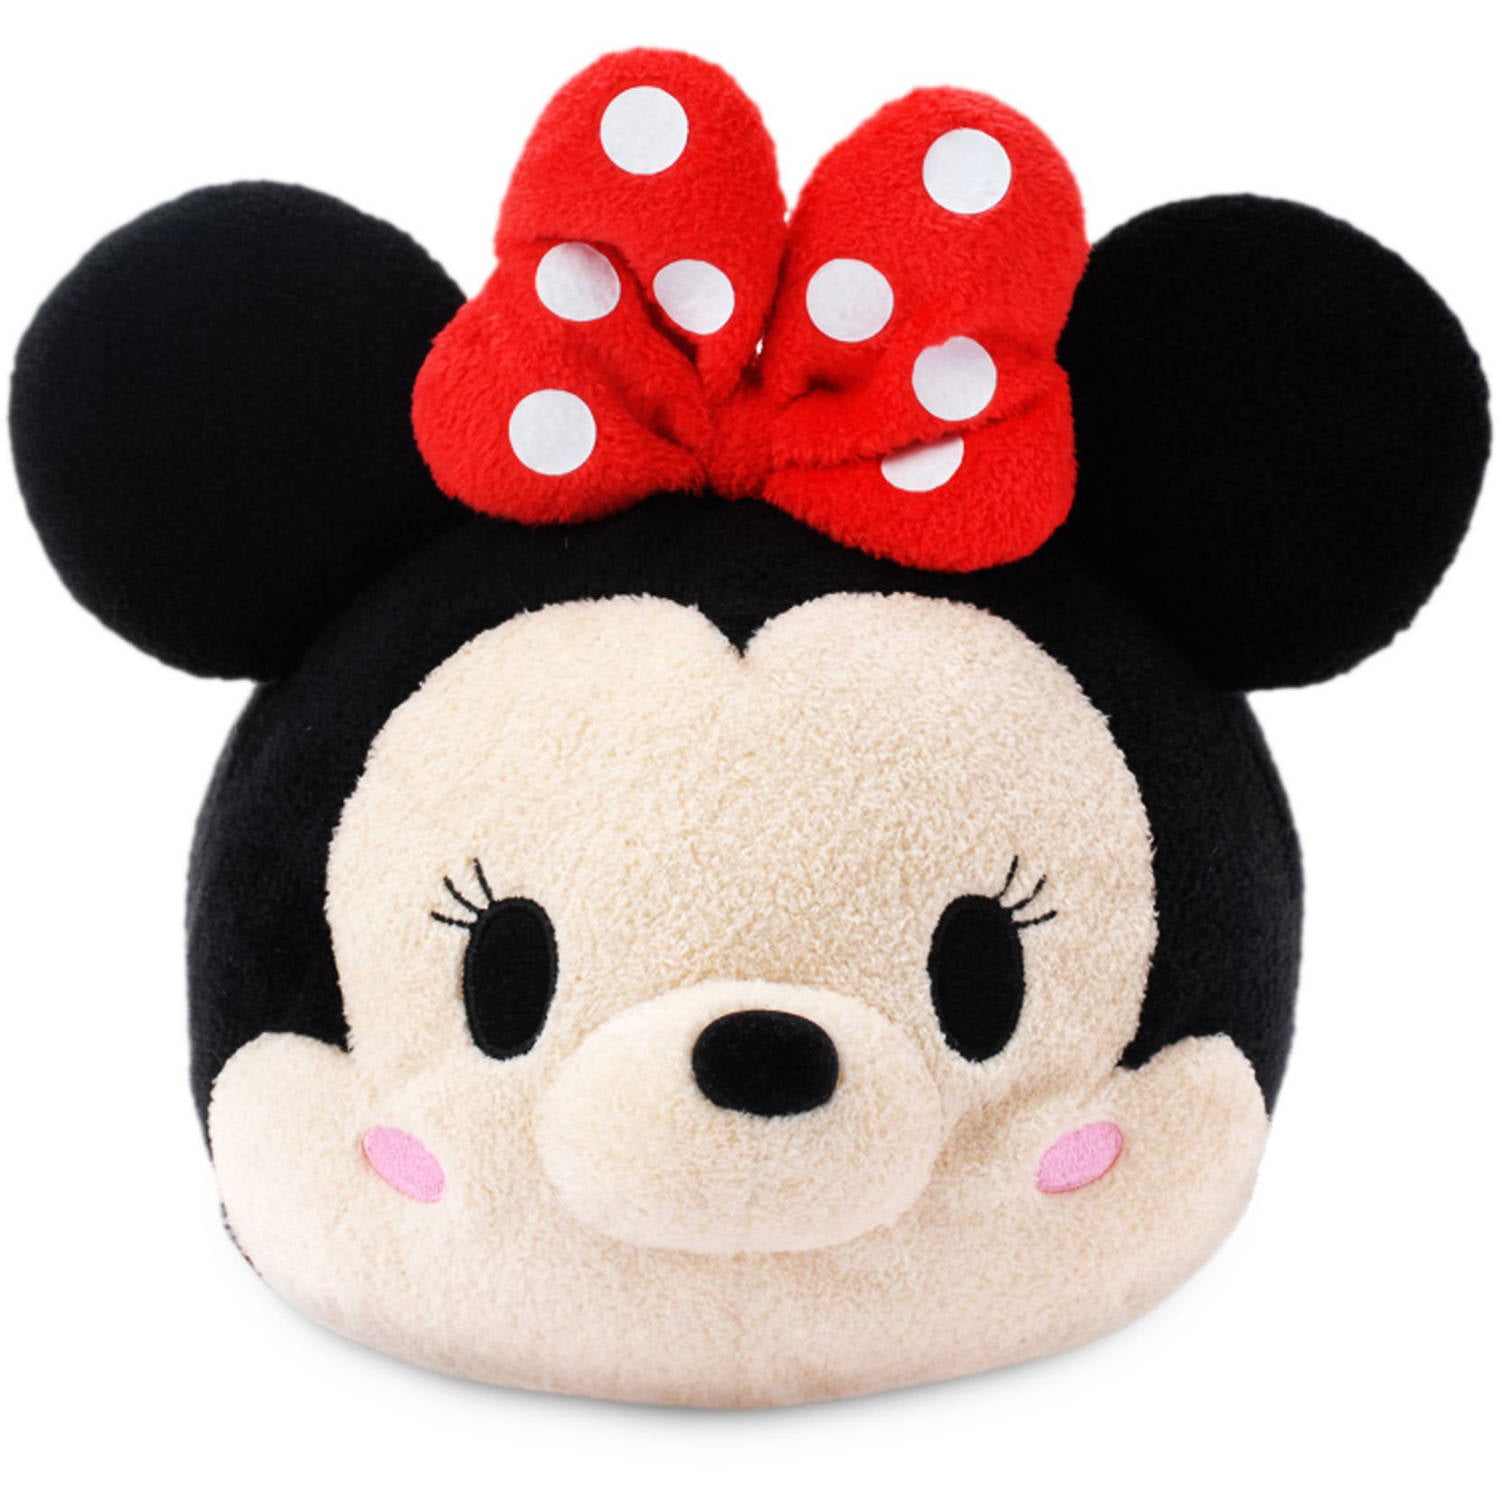 Disney Store TSUM TSUM Minnie Mouse 12" Plush Toy Pillow Large New NWT 